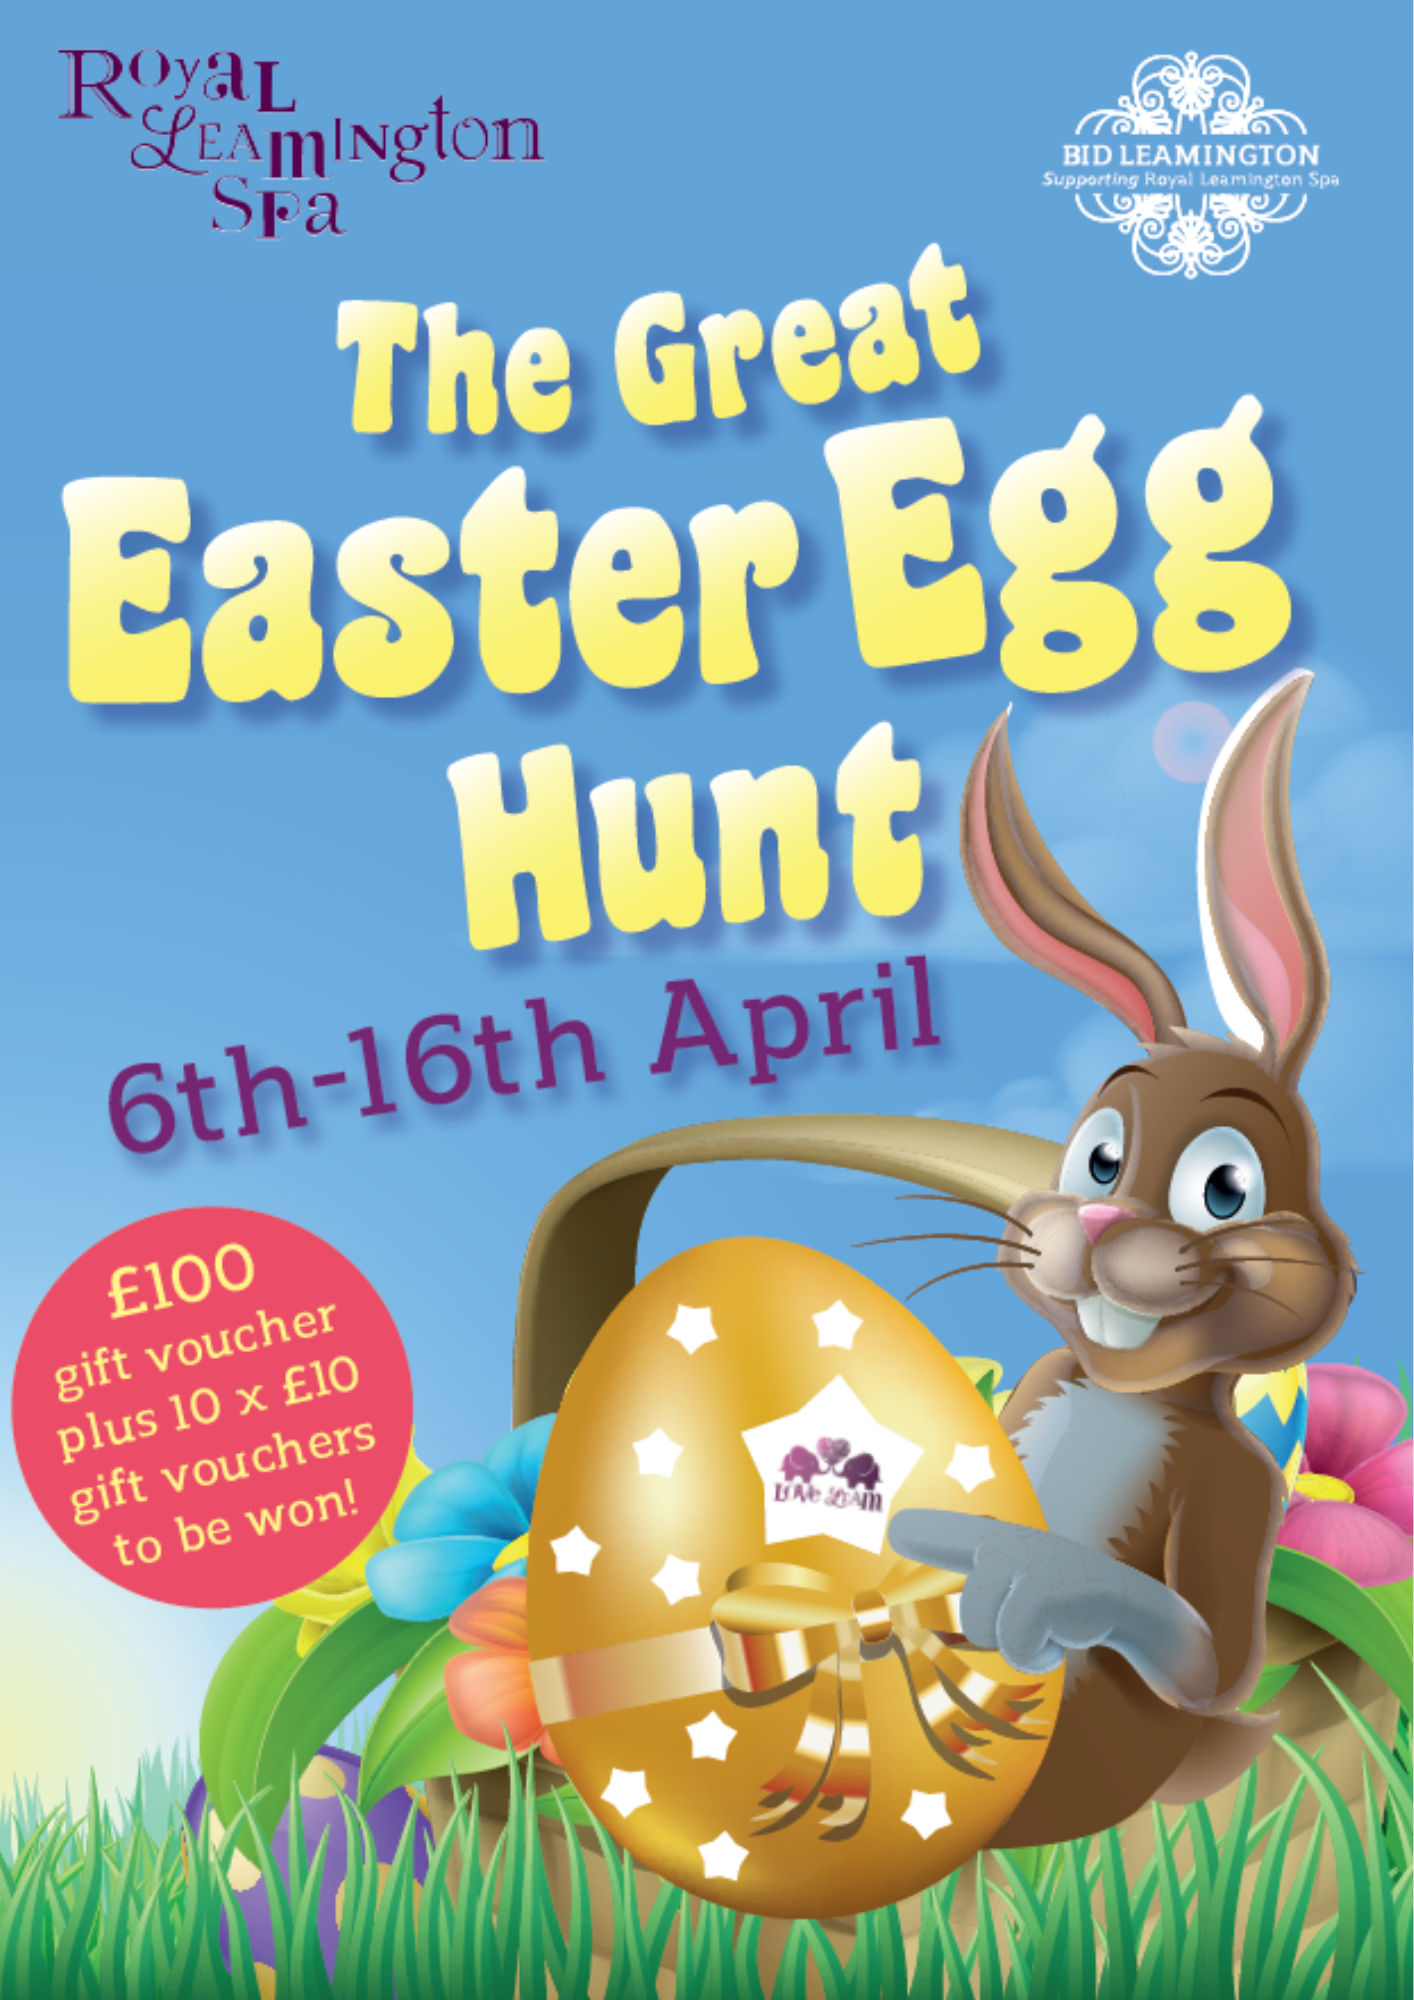 The Great Easter Egg Hunt Royal Leamington Spa